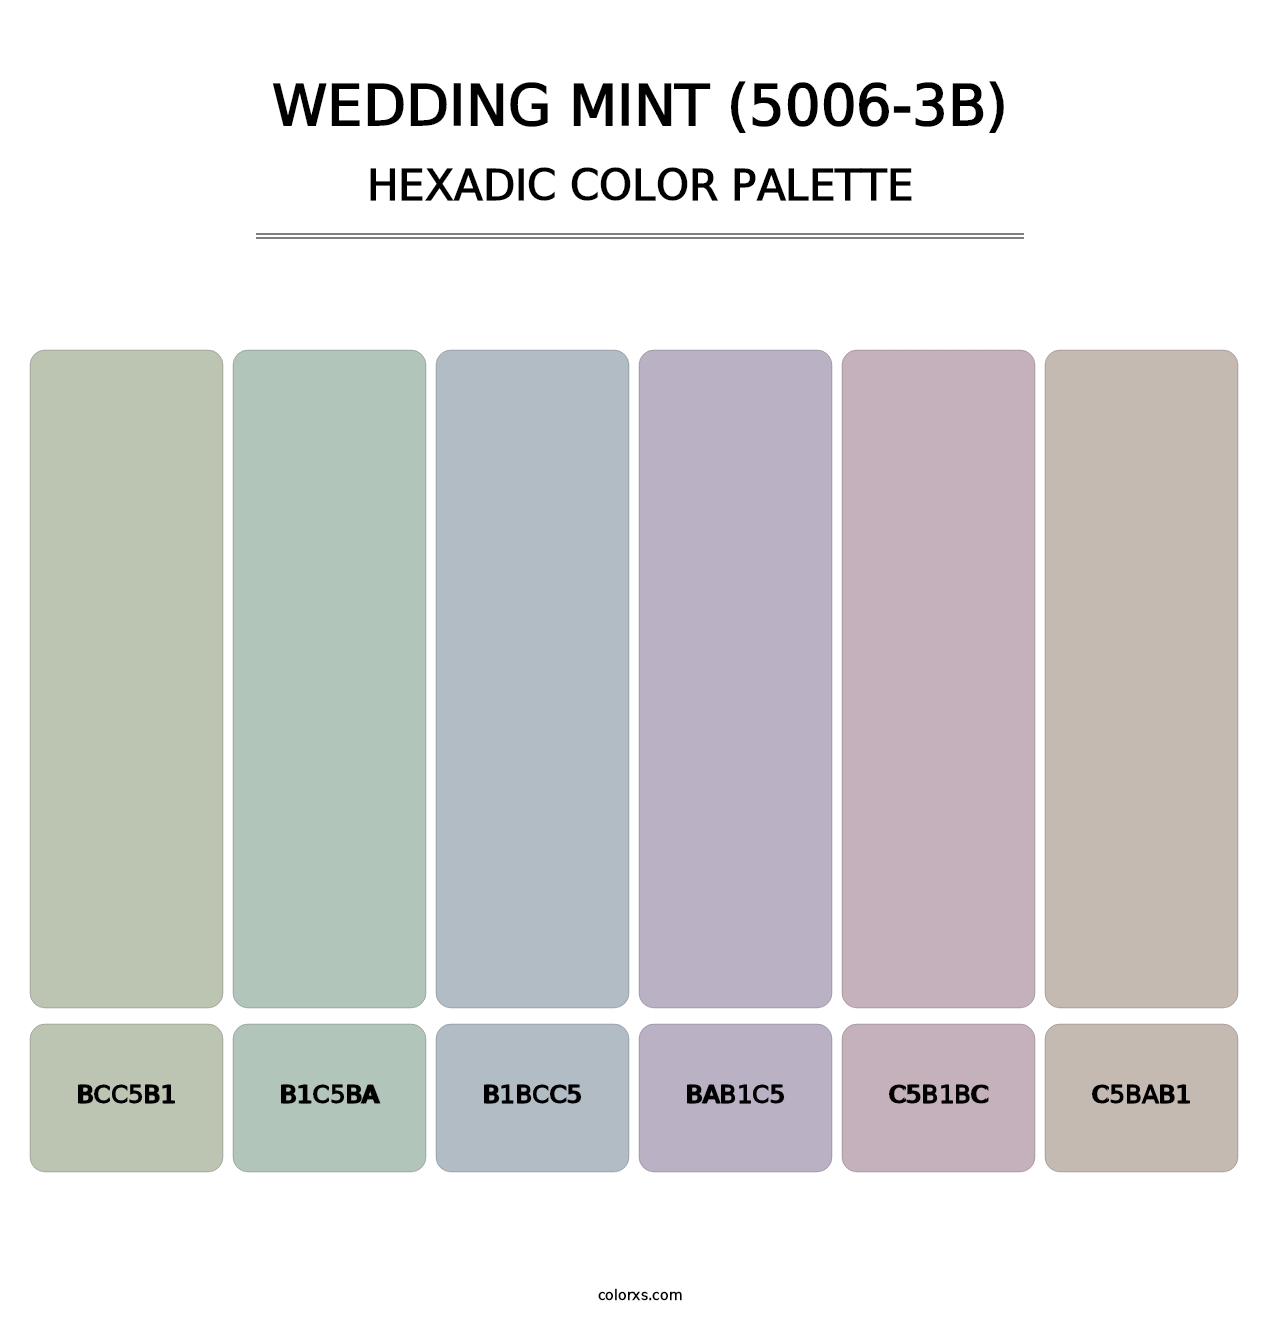 Wedding Mint (5006-3B) - Hexadic Color Palette